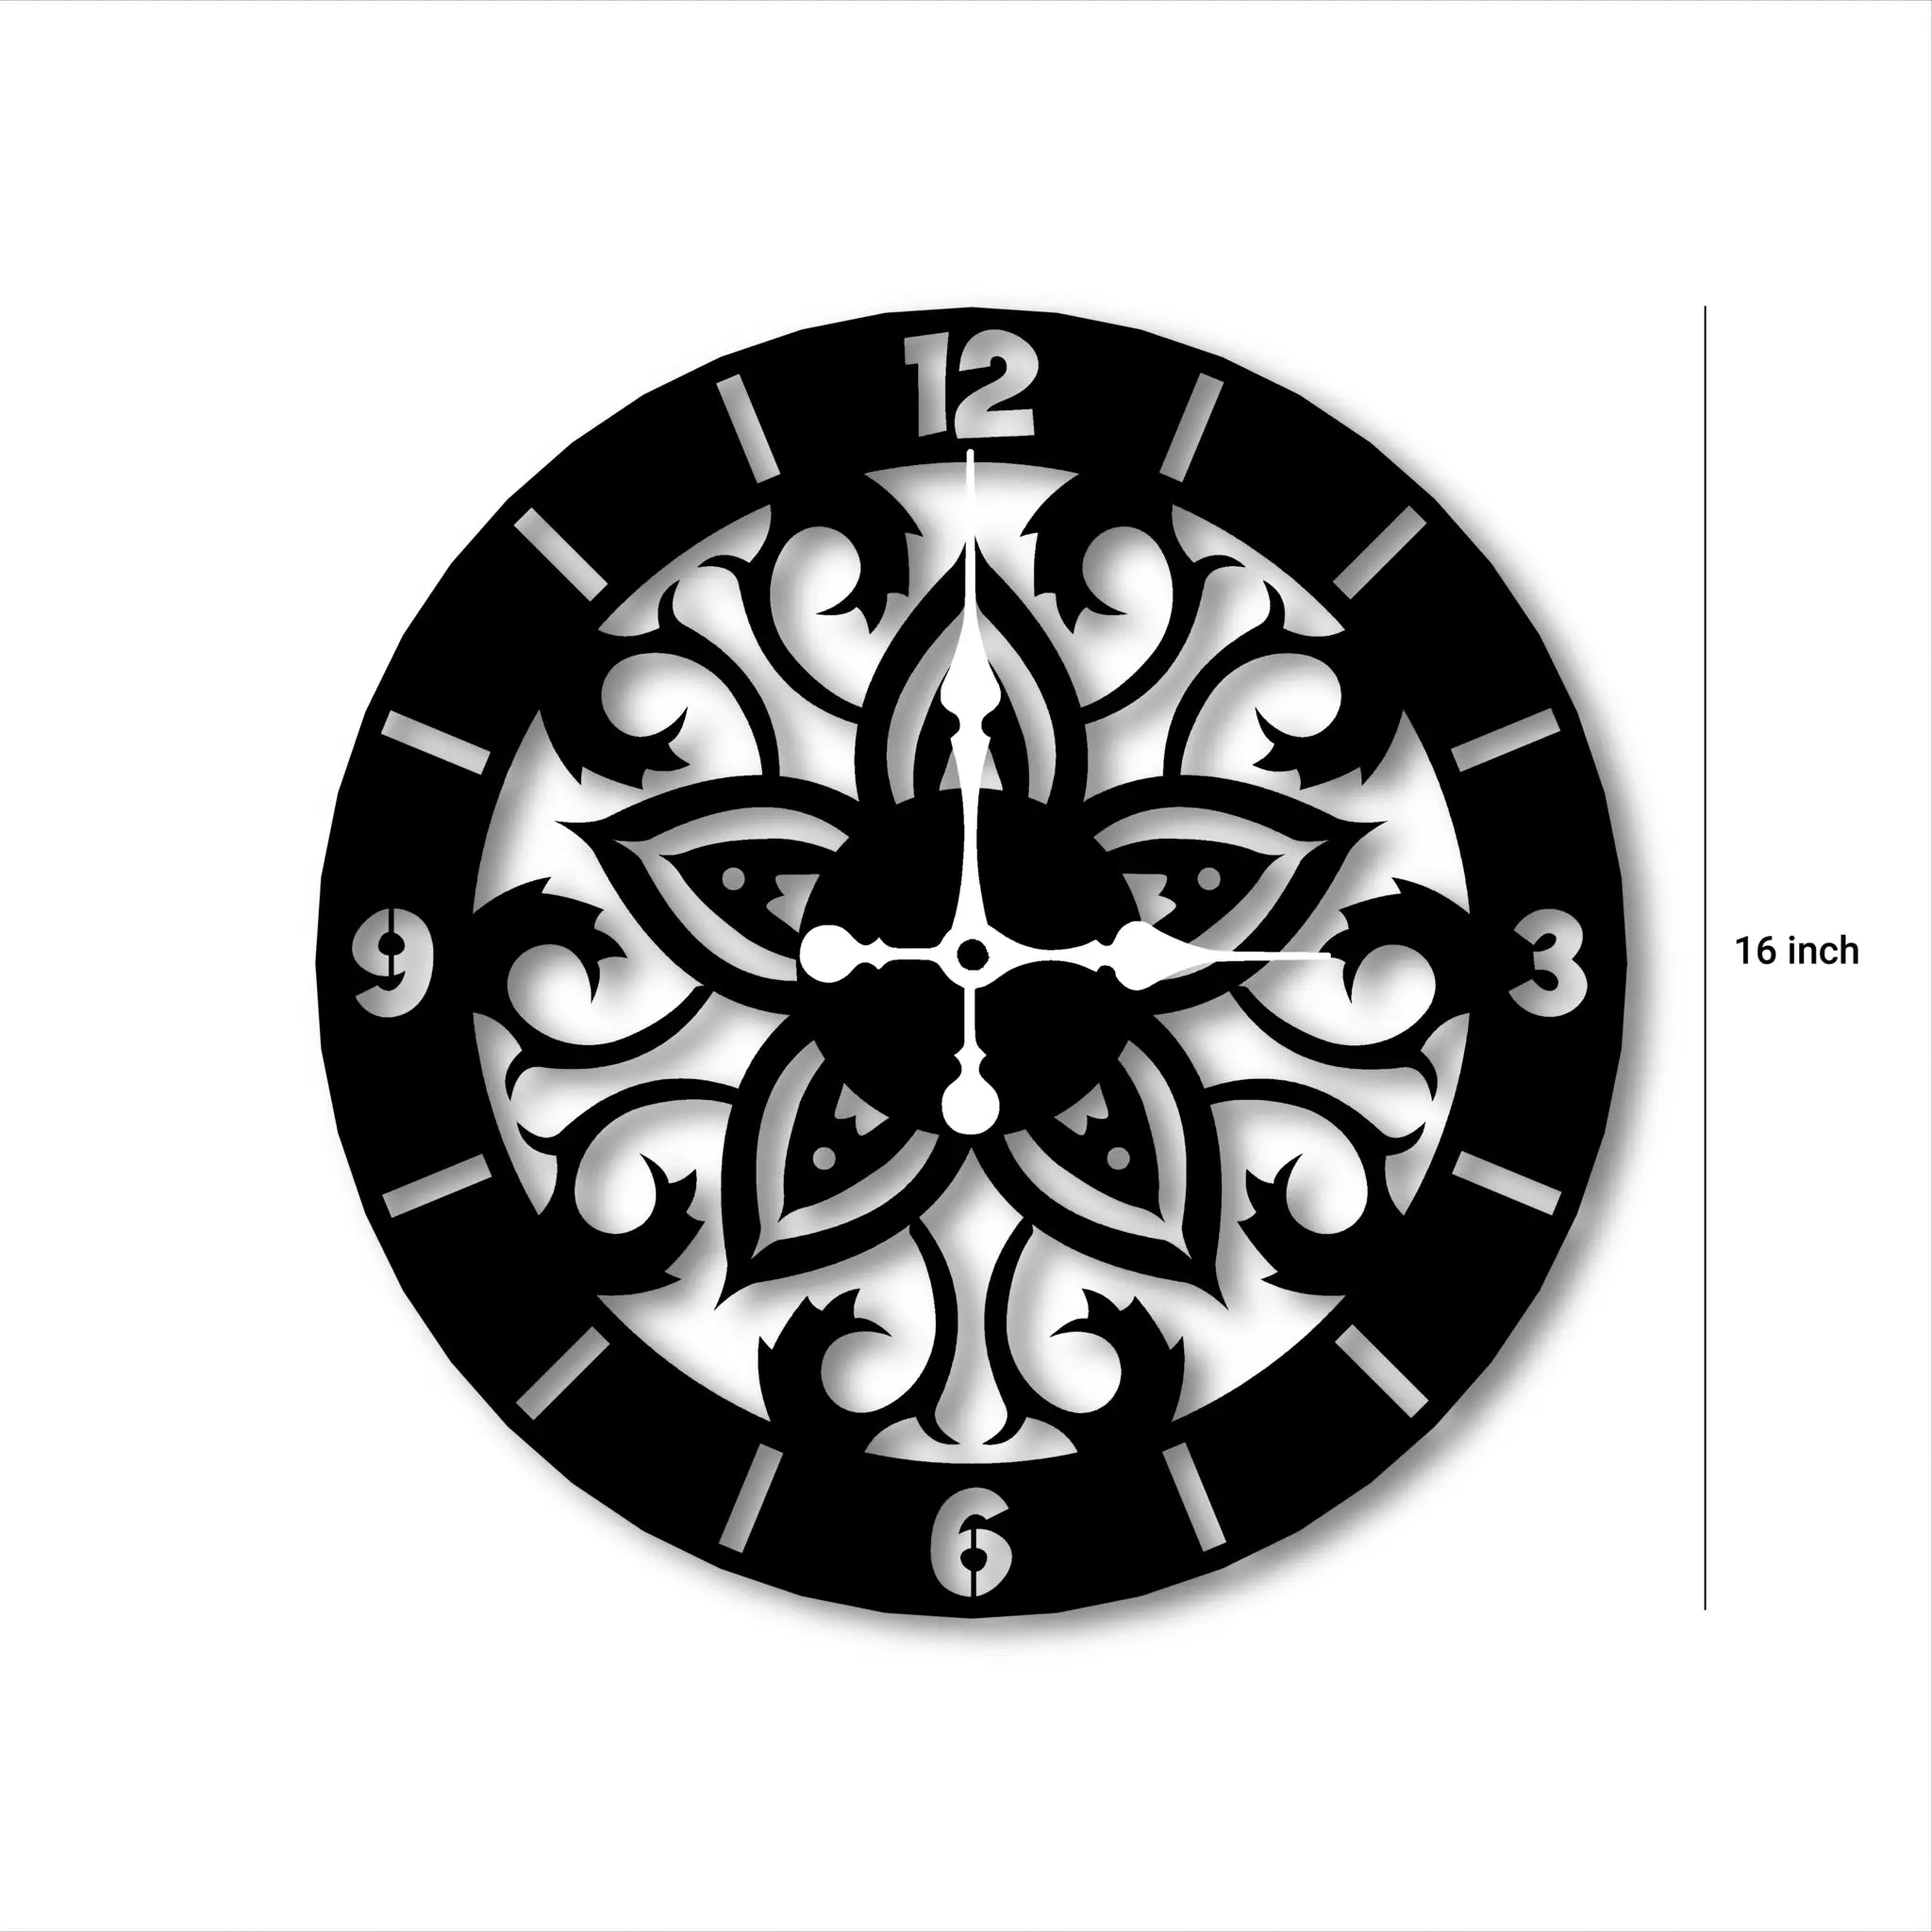 Mandala Clock With Latin Numerals,Mid Century Themed Office Wall Clock,Kitchen Wall Hanging Clock,Laser Cut Metal Wall Clock